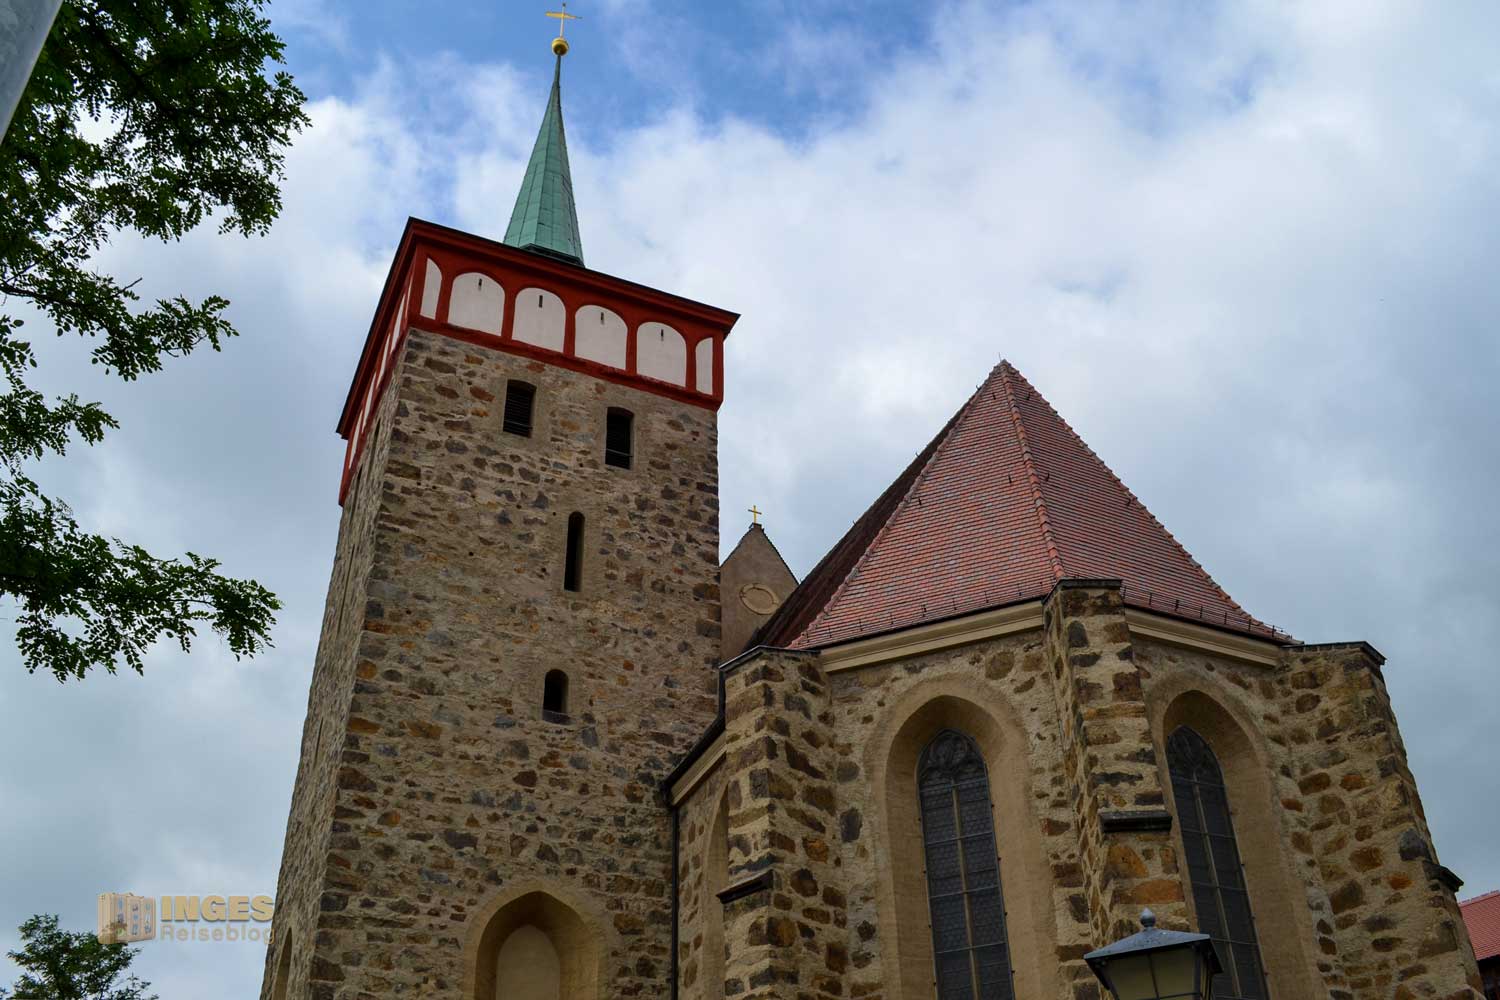 Michaeliskirche in Bautzen